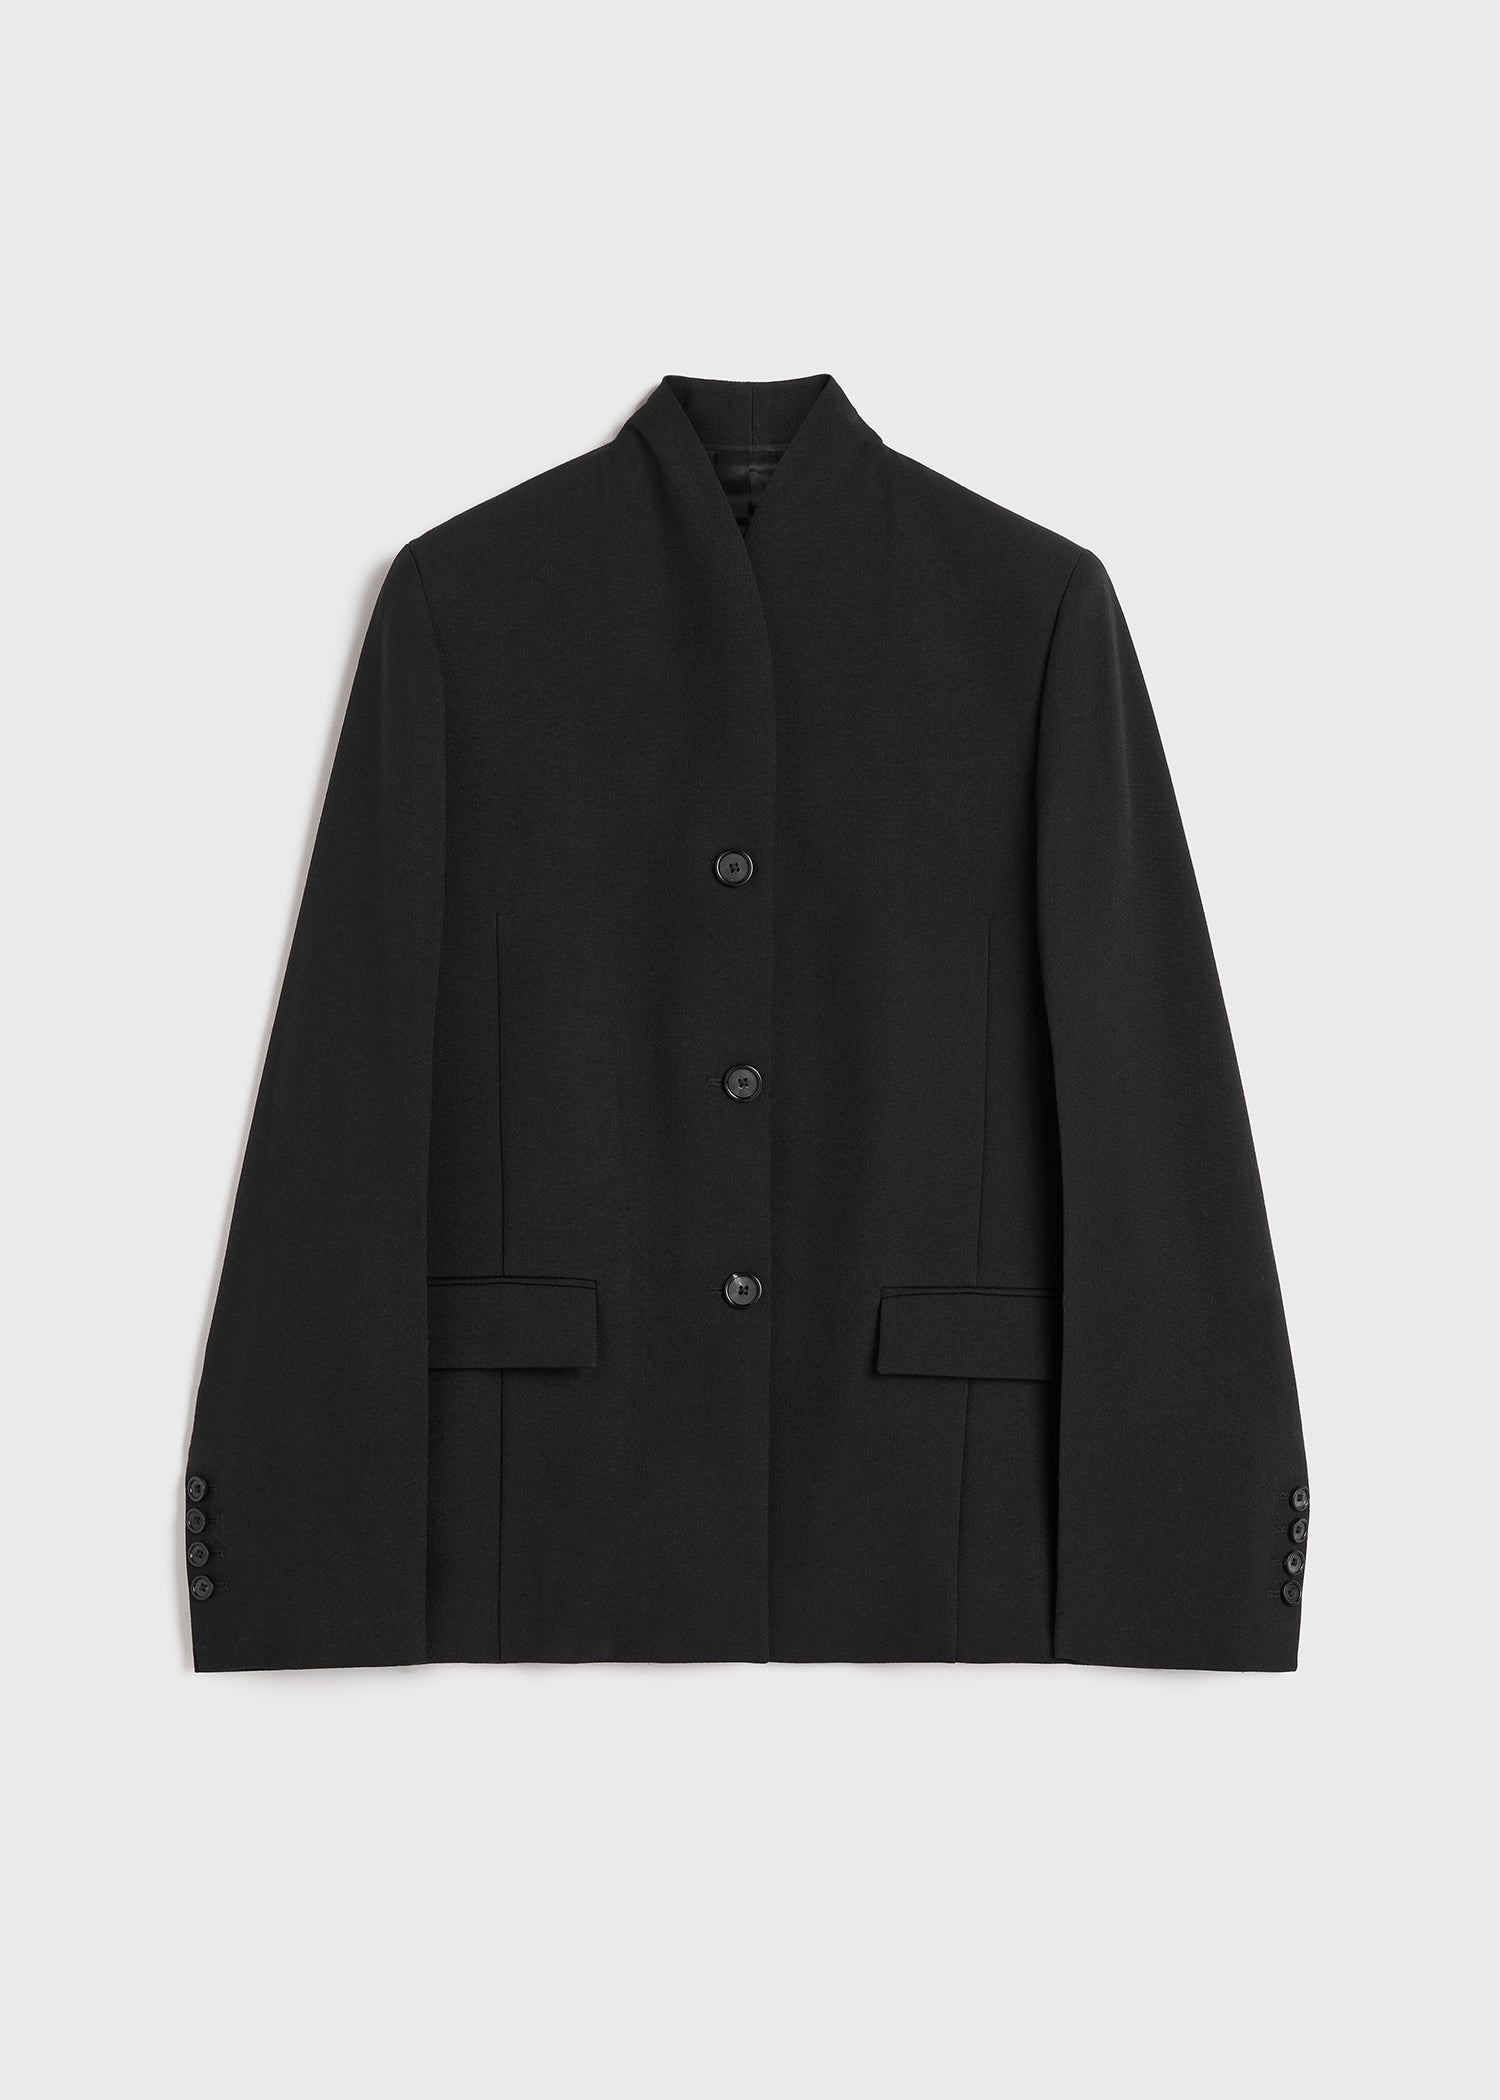 Overlay suit jacket black - 1